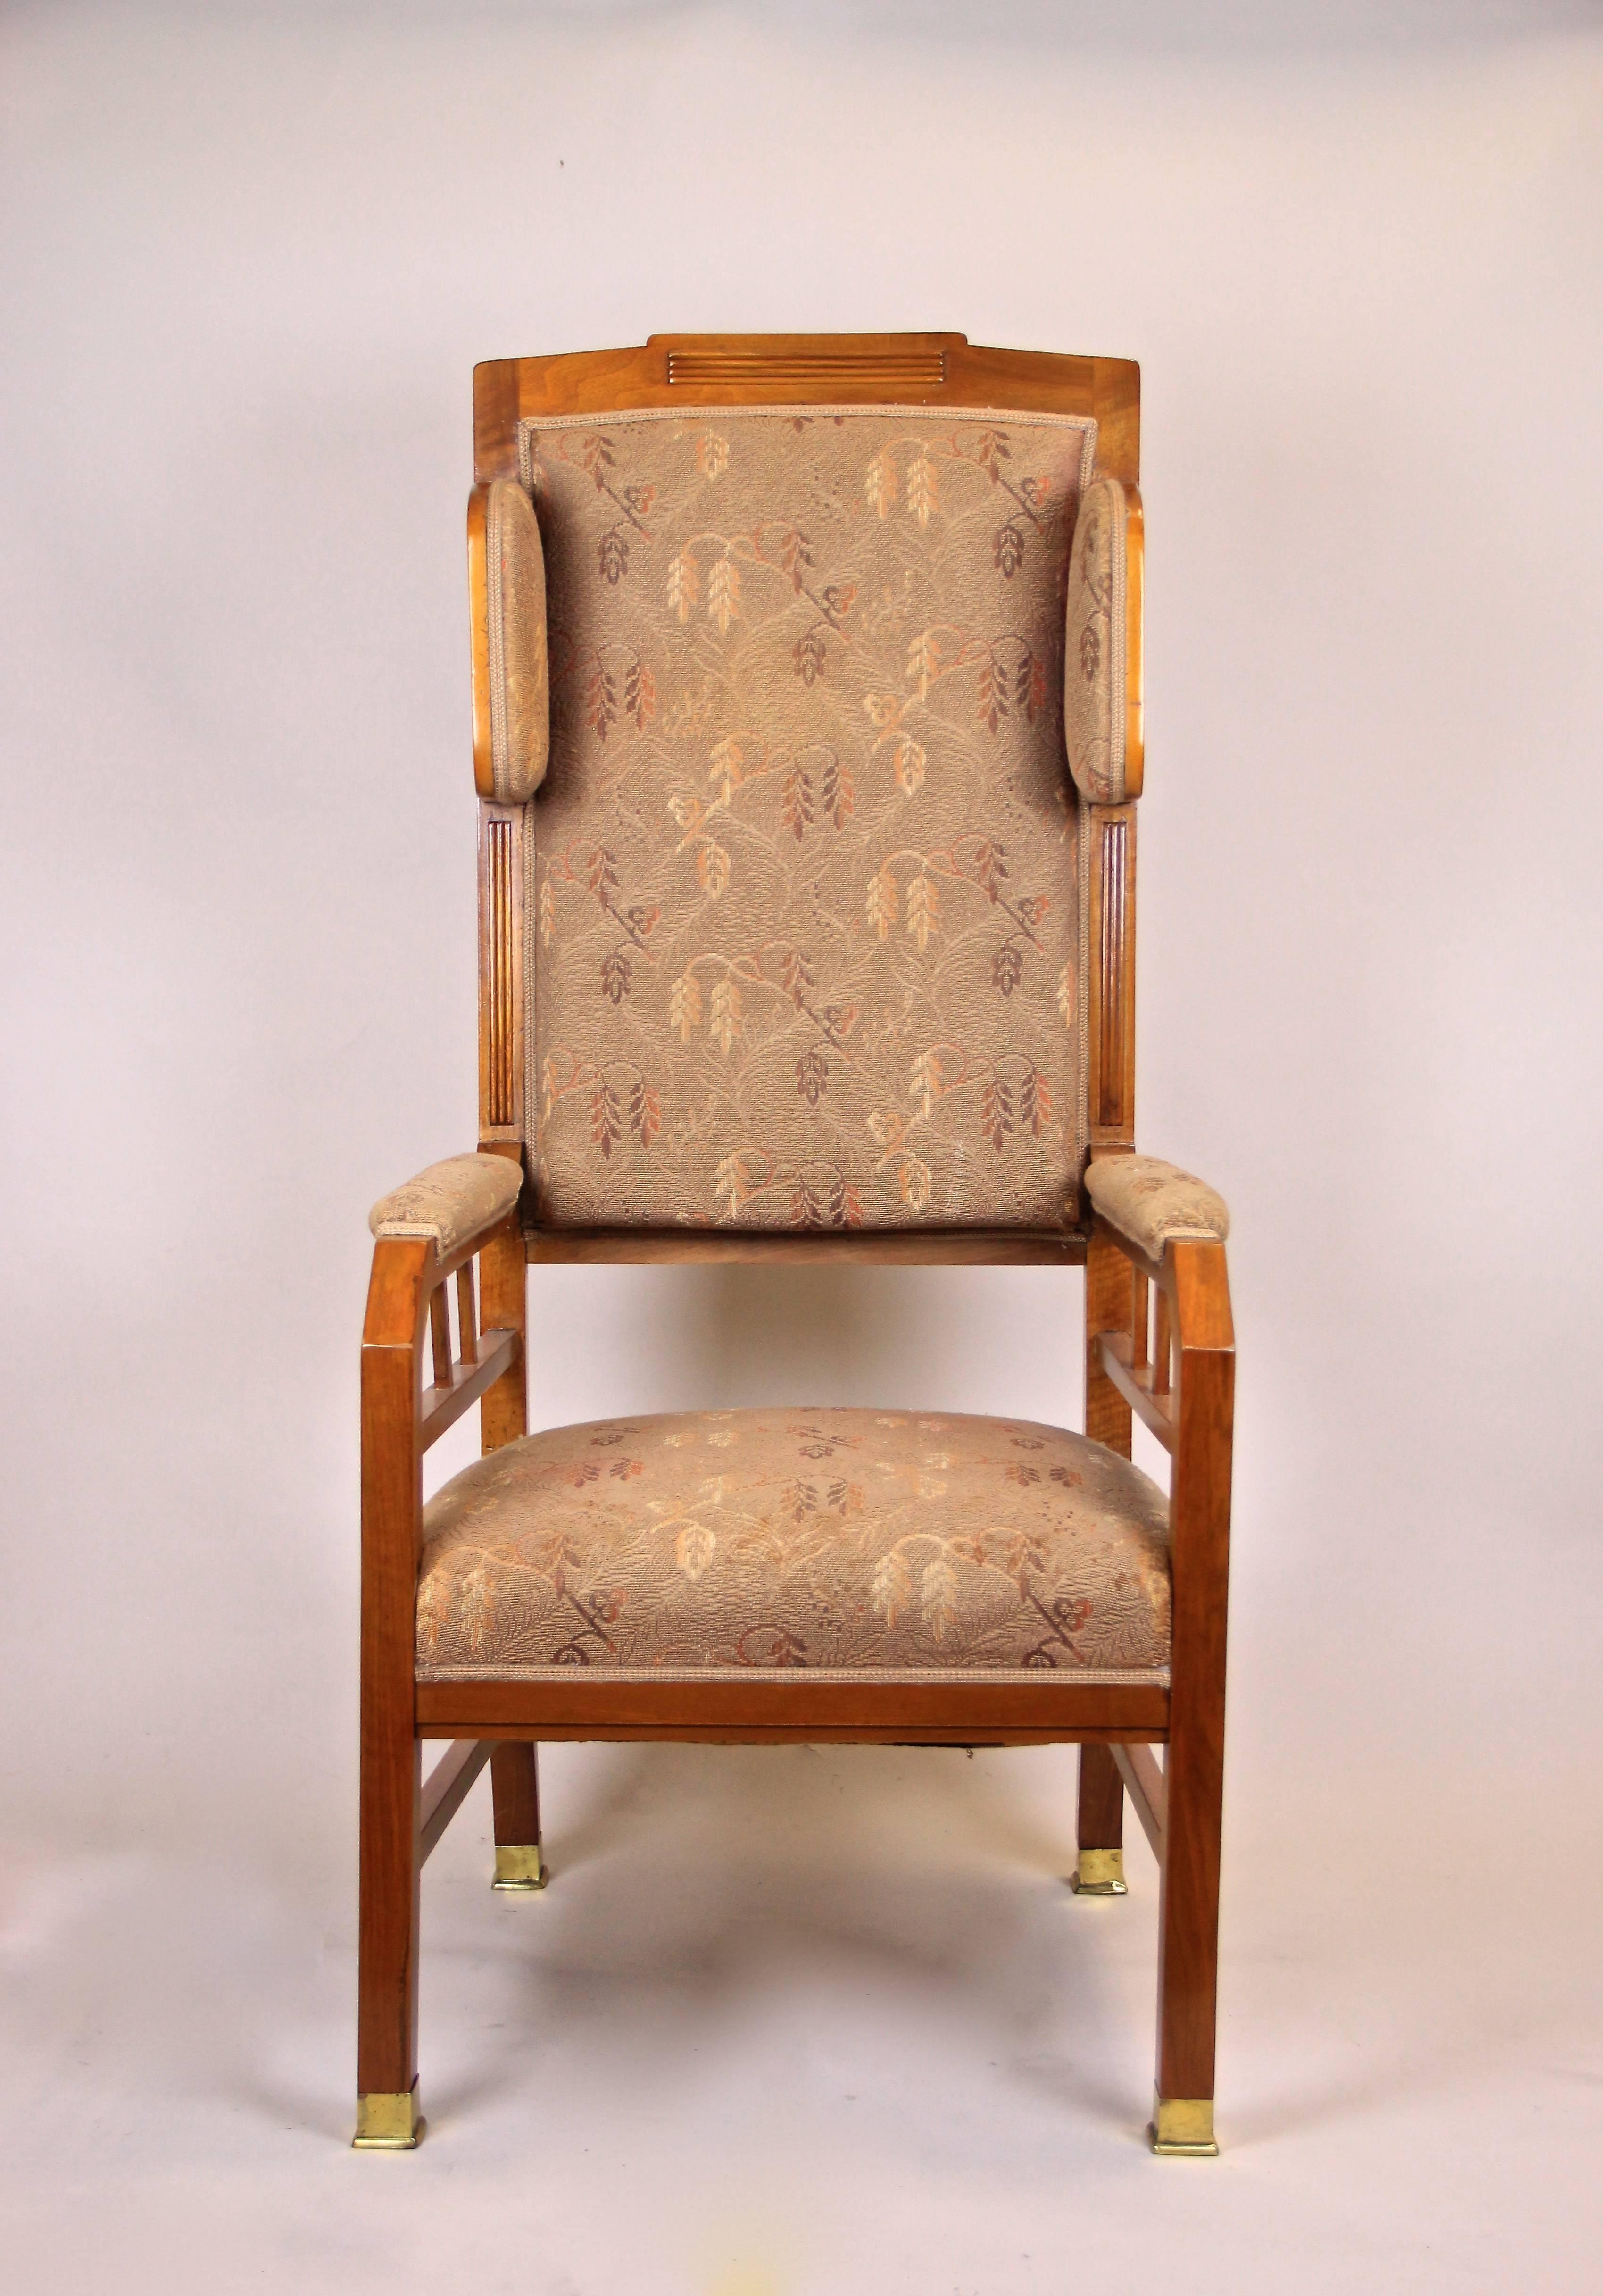 Austrian Art Nouveau Wing Chair Nut Wood with Original Upholstery, Austria, circa 1905